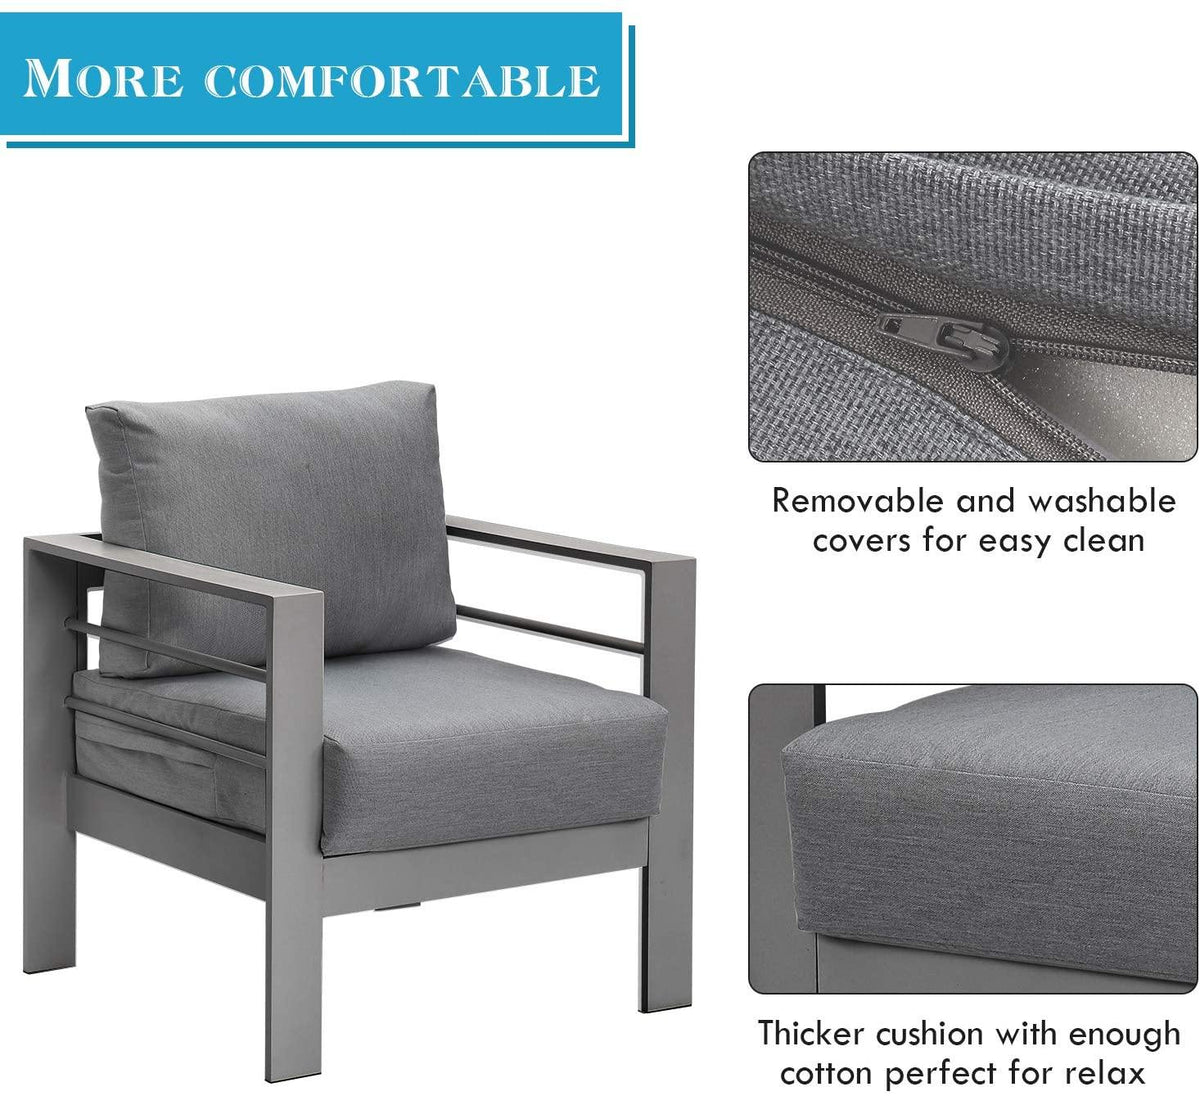 Aluminium 4 Piece Garden Furniture Set - 3, 2, 1 Sofas &amp; Coffee Table - Grey Rattan Furniture MaxiFurn 